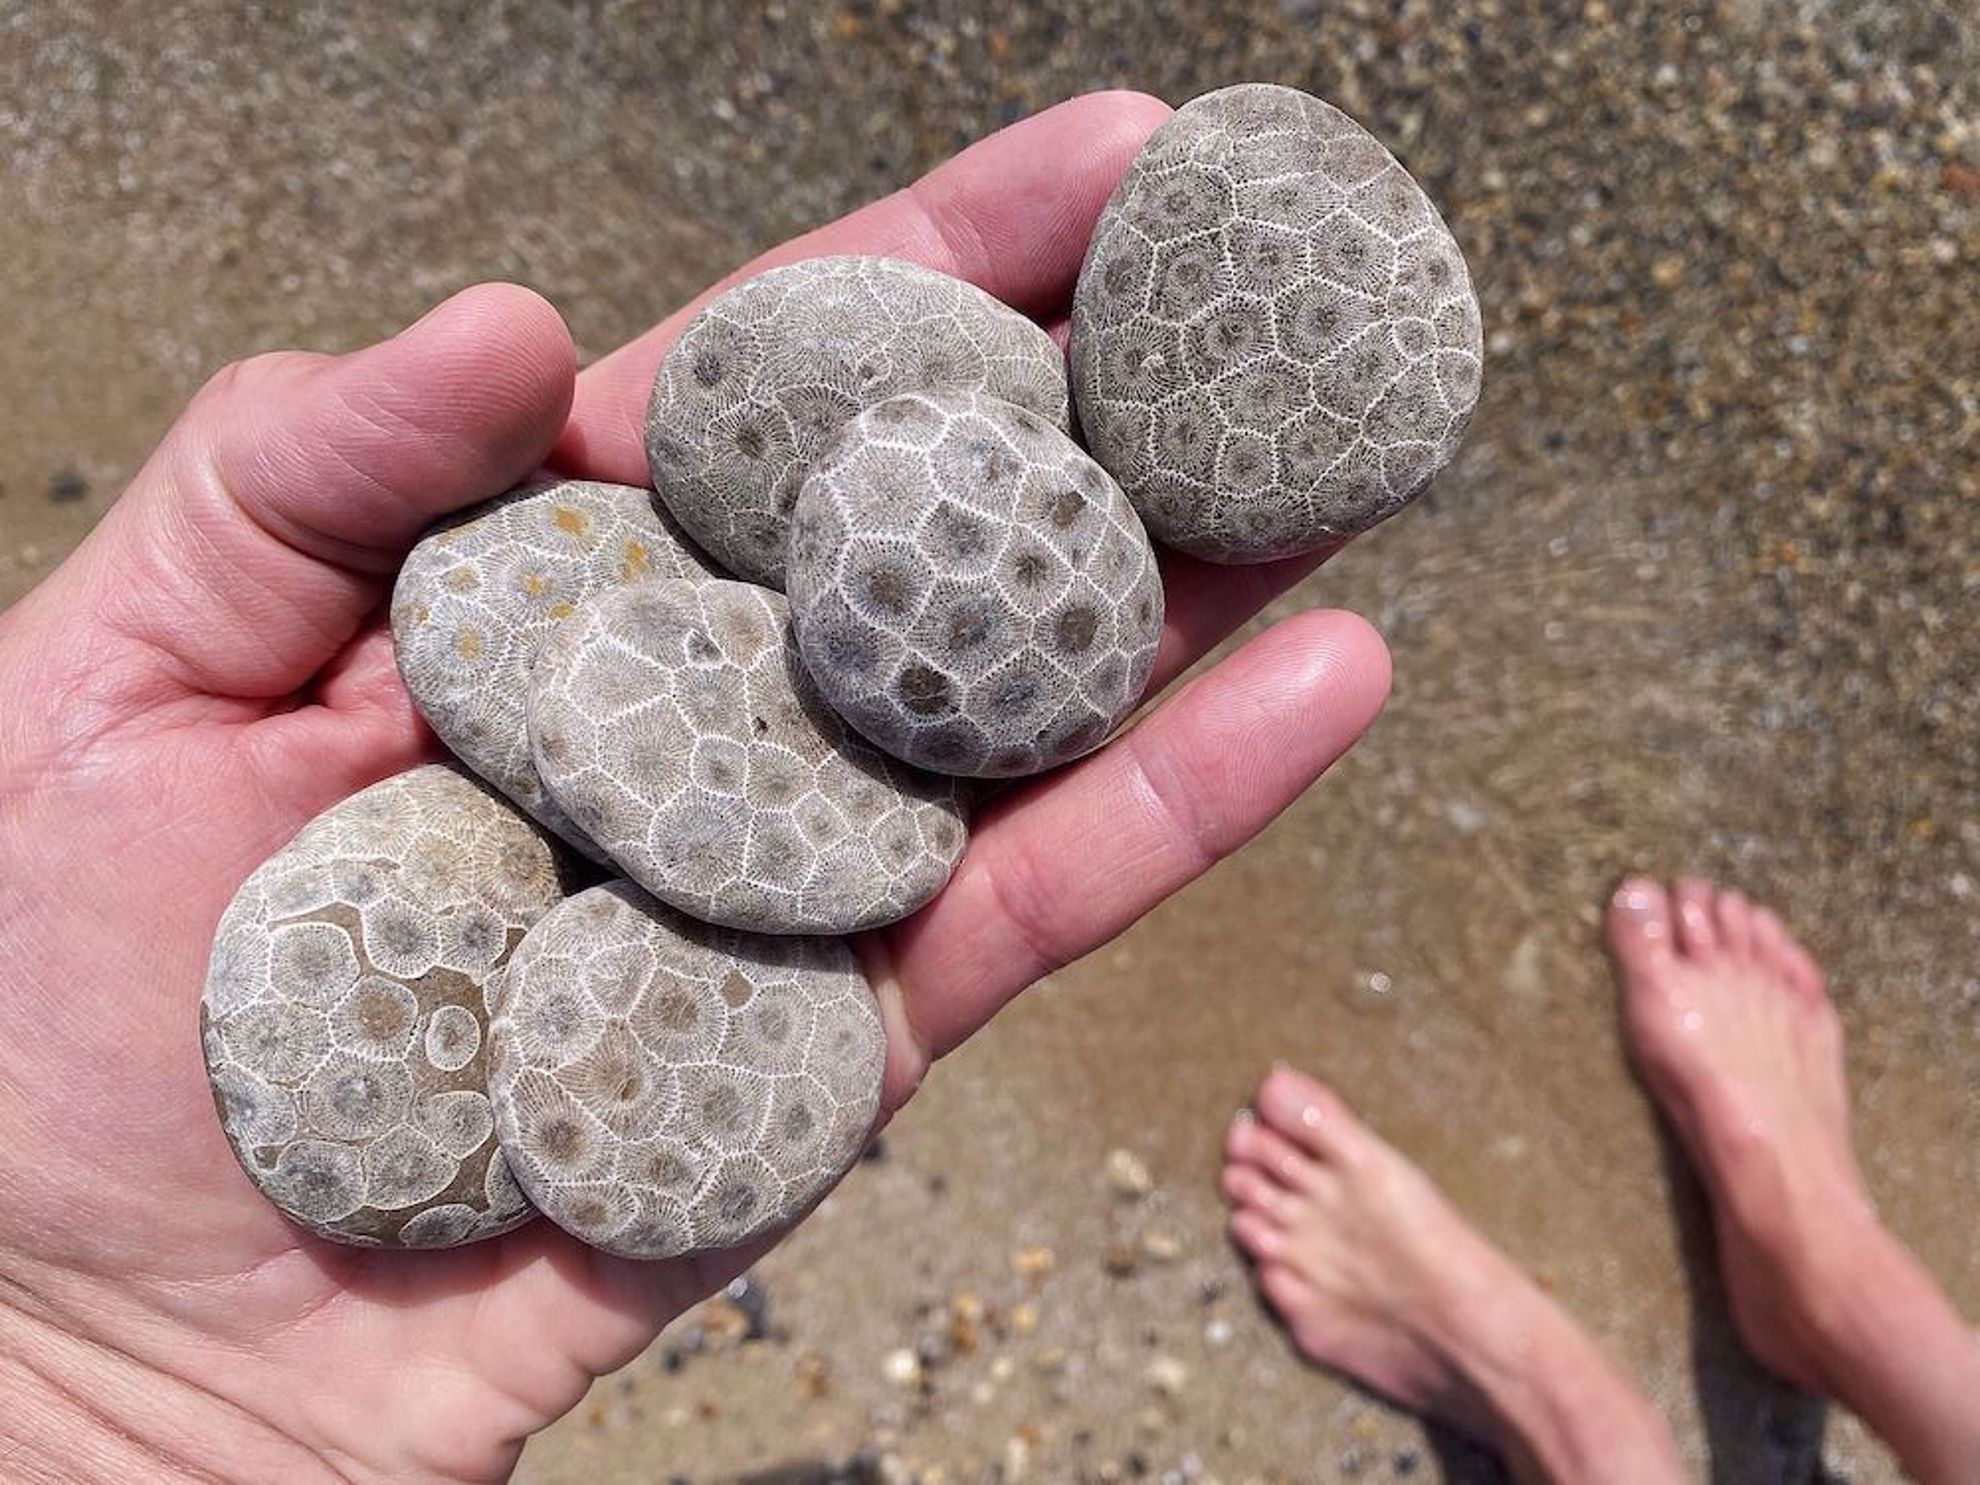 Stones found near Petoskey